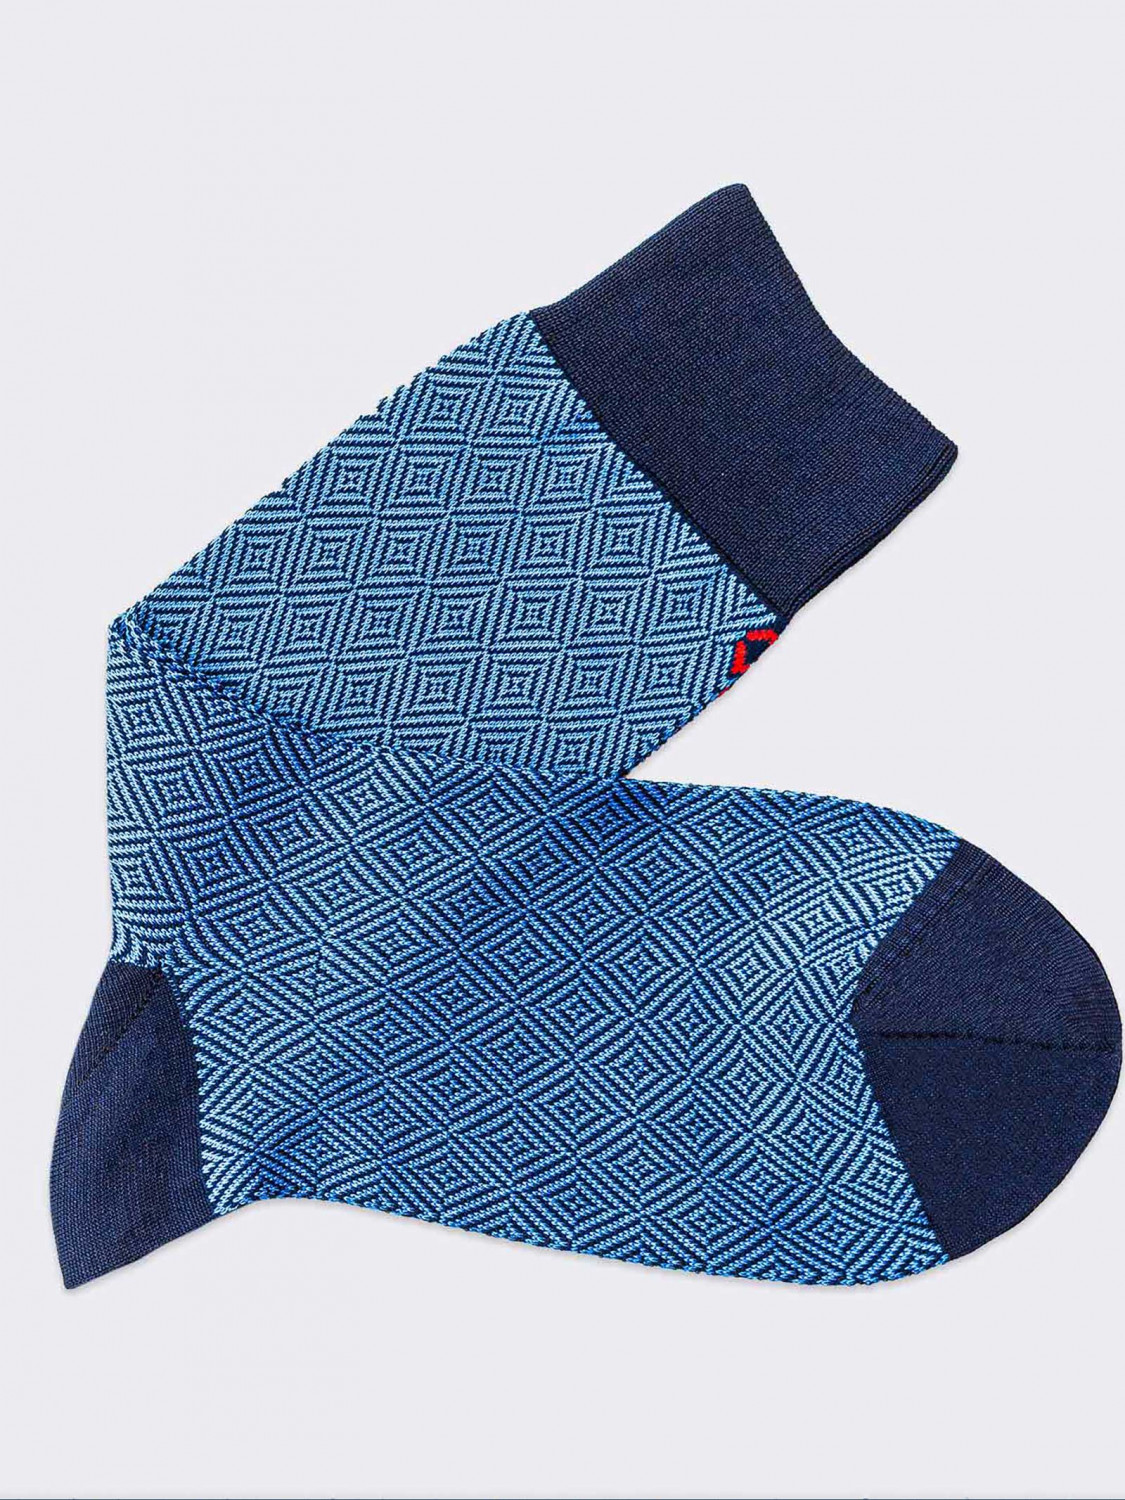 Diamond pattern Men's Crew Socks